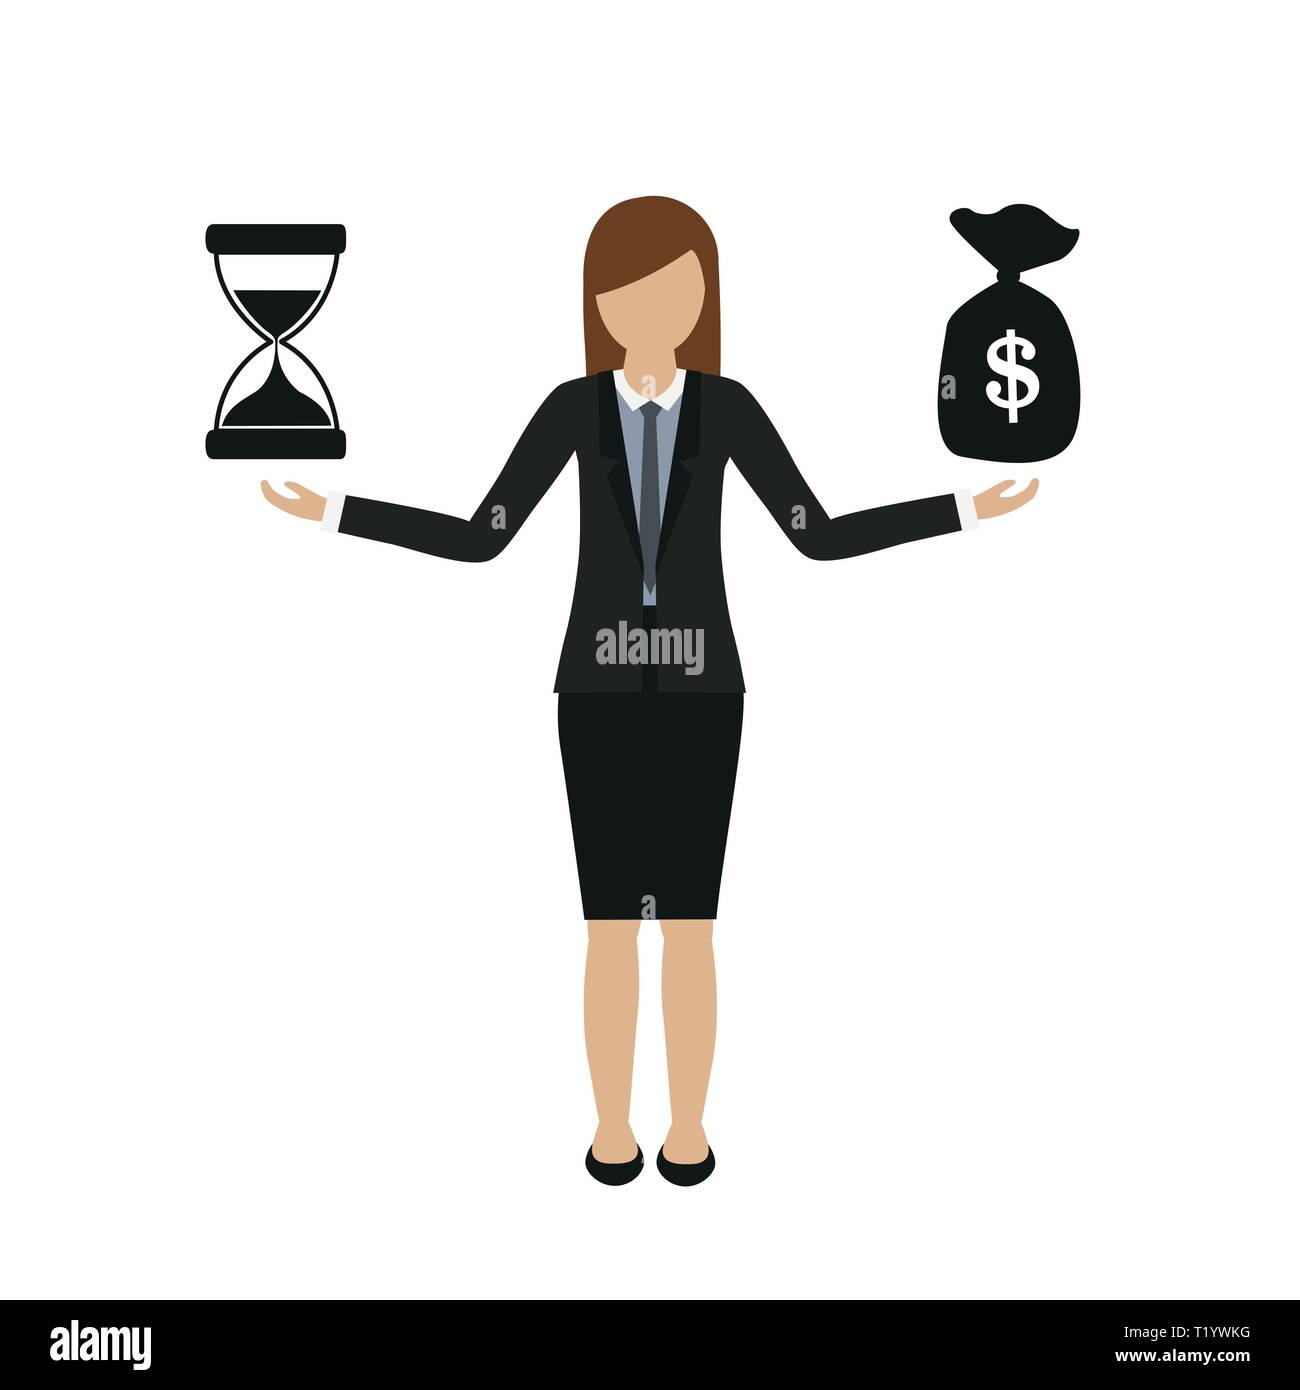 Business Konzept über Zeit und Geld Business woman Charakter Vektor-illustration EPS 10. Stock Vektor